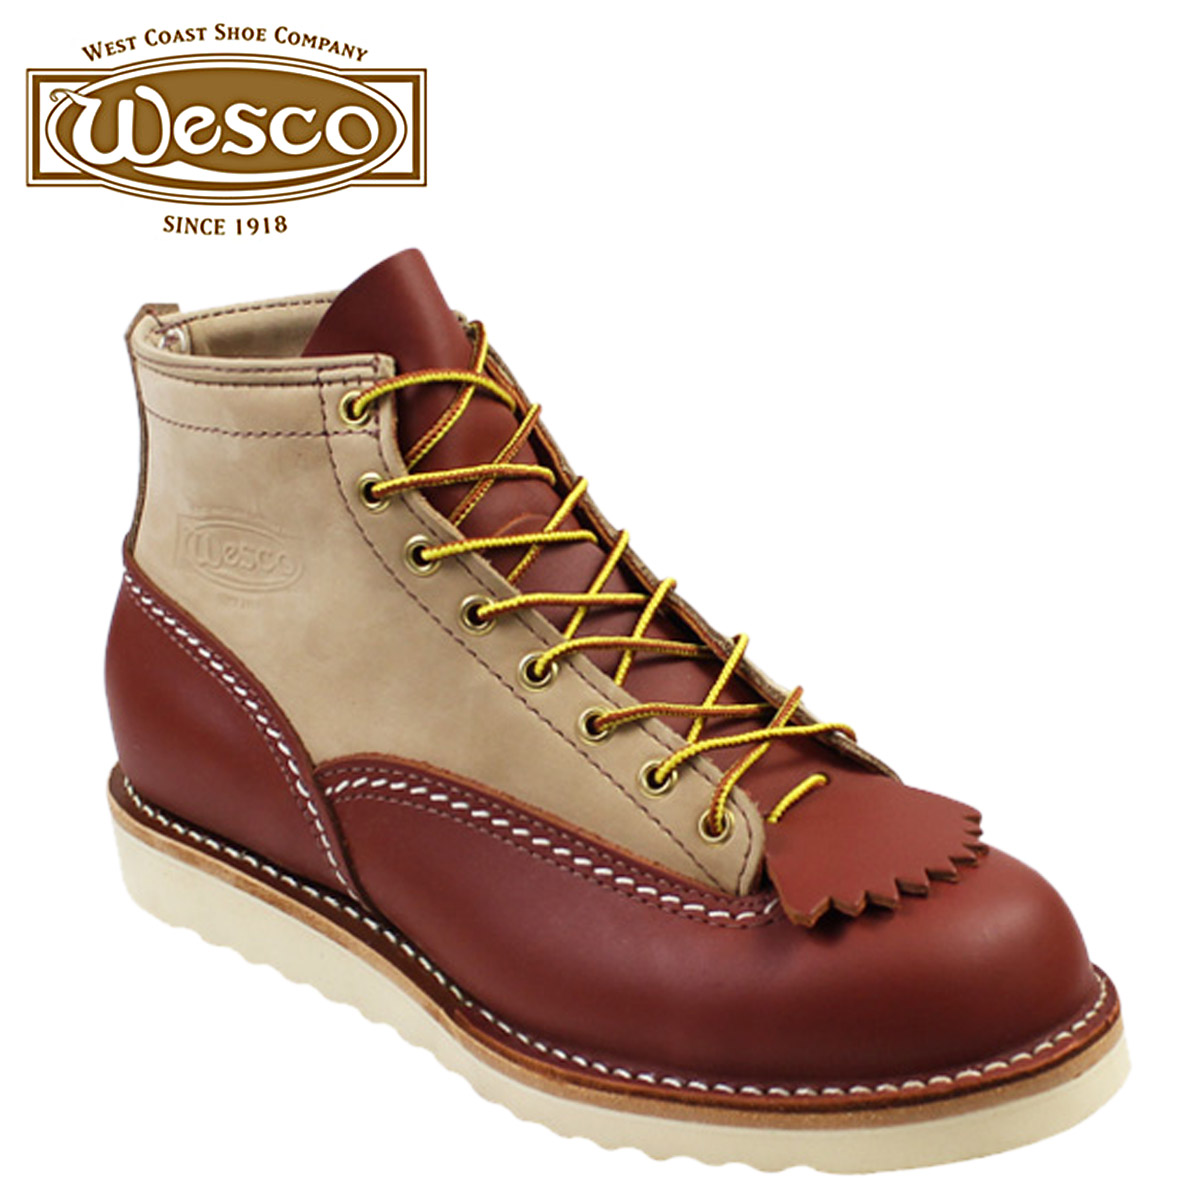 wesco logger boots